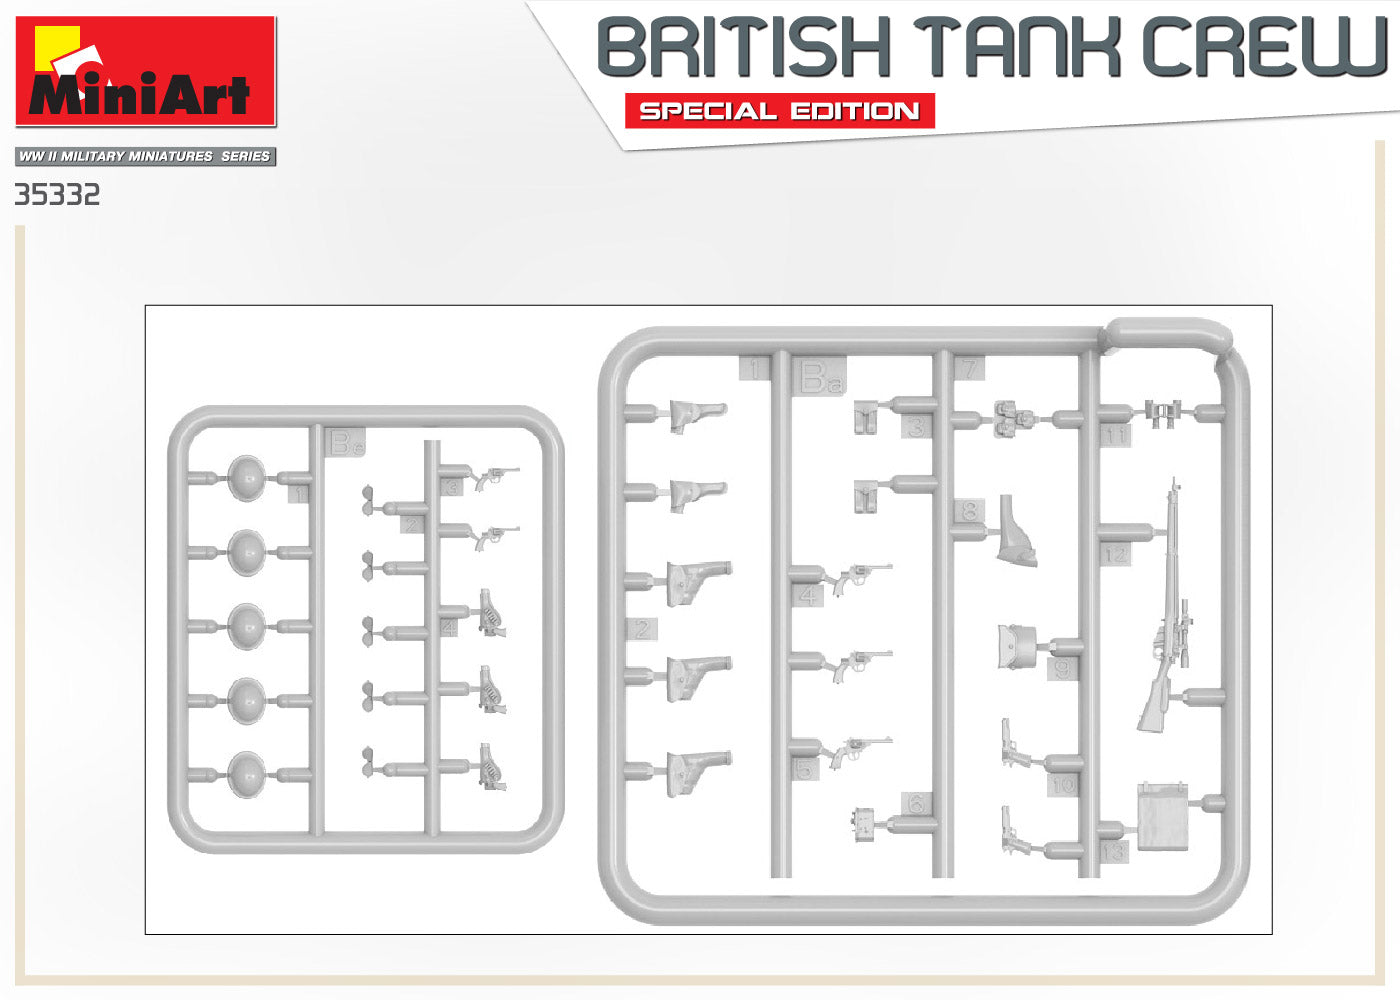 Miniart 1:35 British Tank Crew Special Edition Figure Set